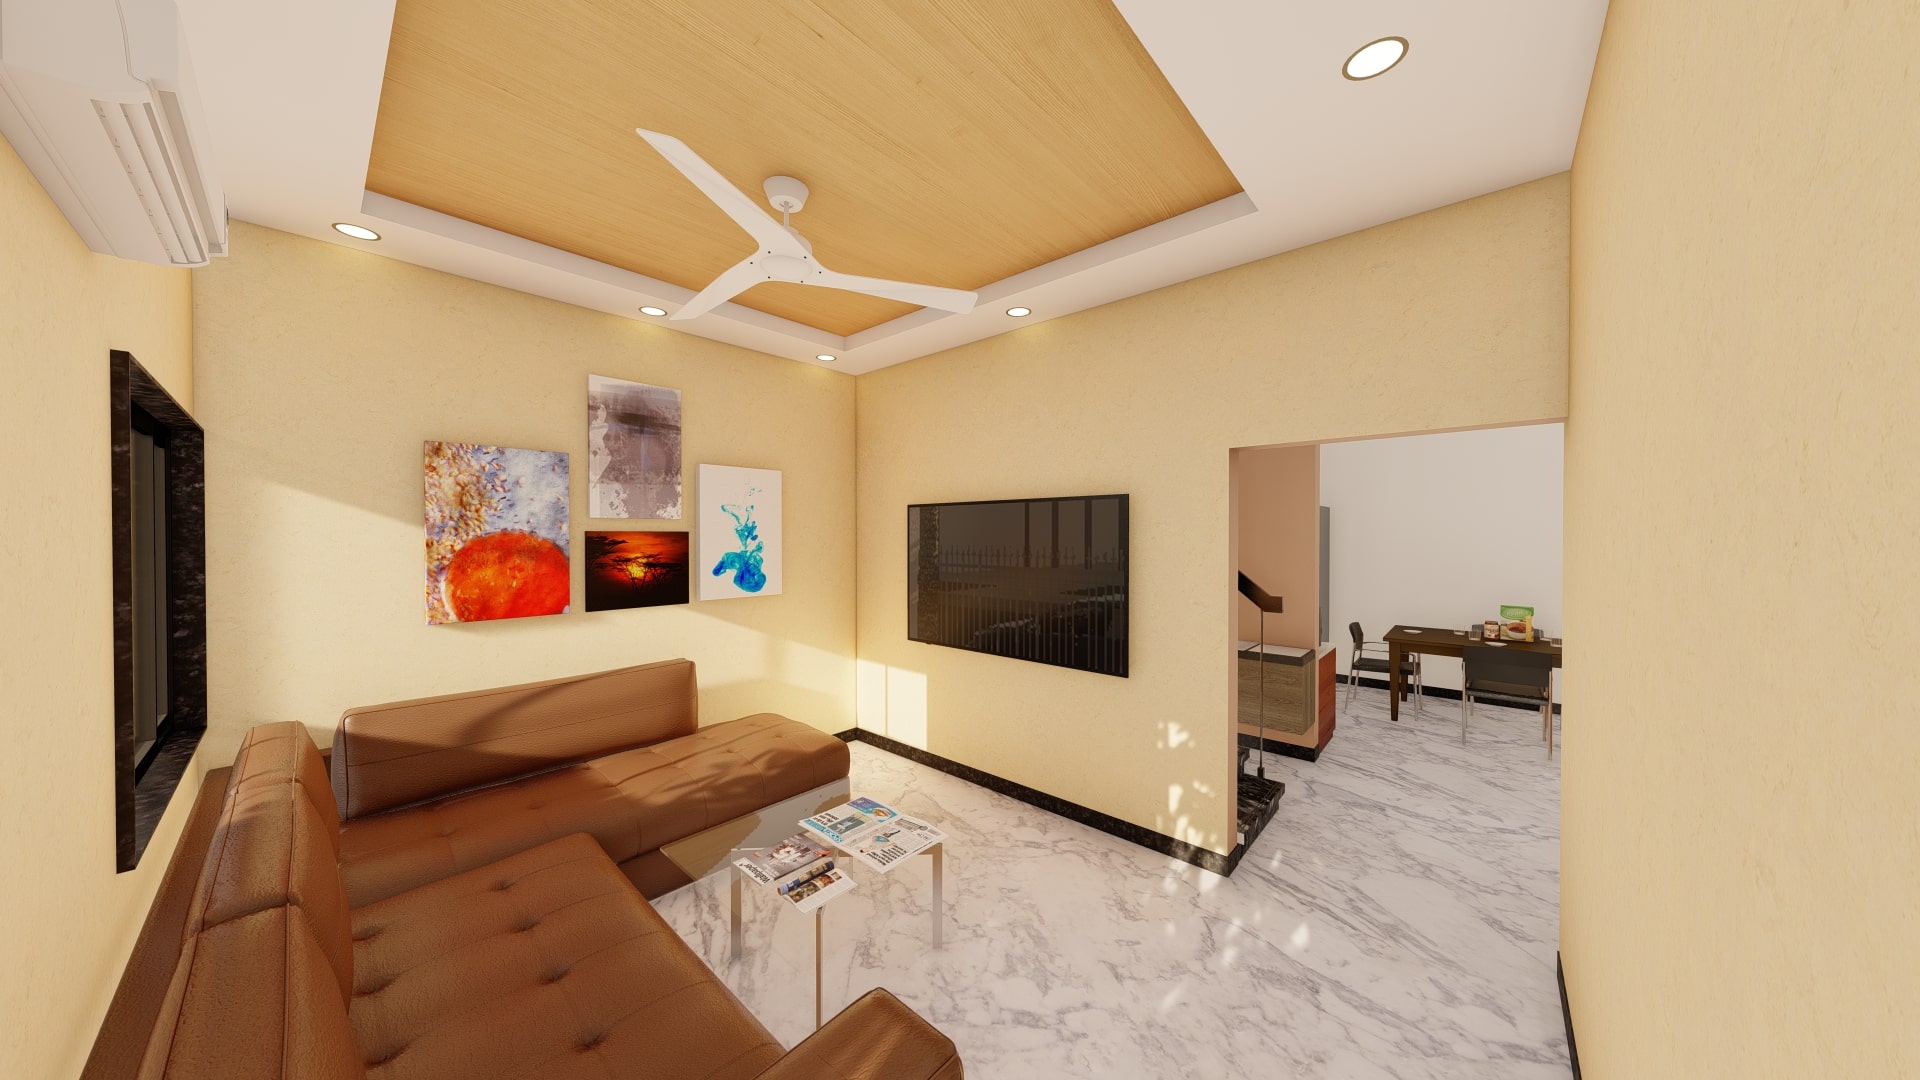 living room of new duplex layout design north facing 1000 sq ft urban terrace